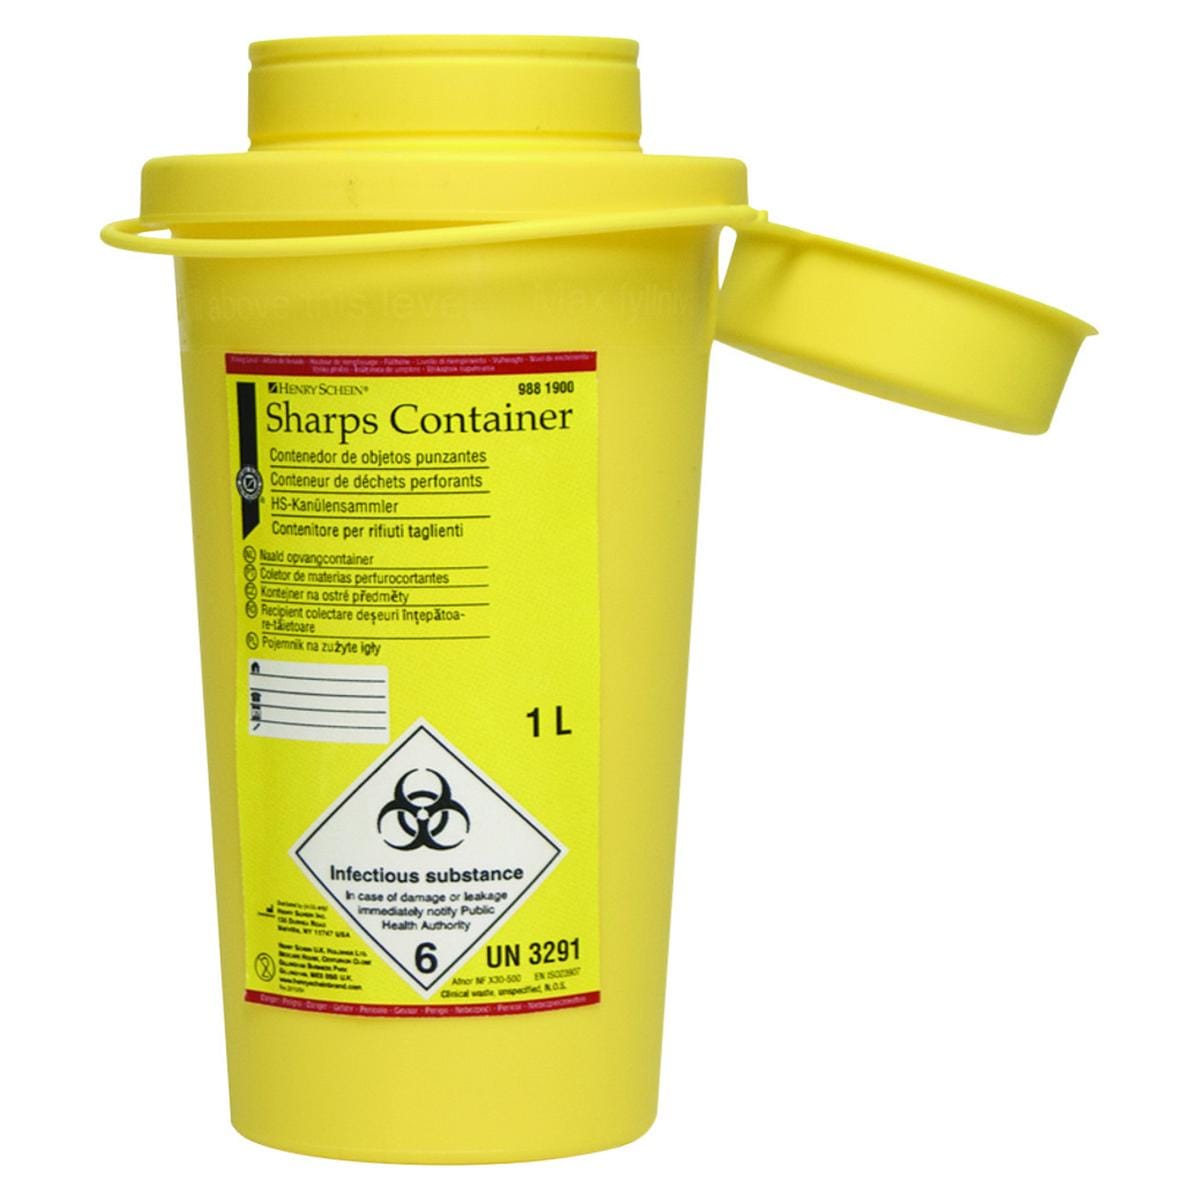 HS-Entsorgungsbehälter / Kanülensammler - 1 Liter, (B x T x H) 8,6 x 8,6 x 27 cm